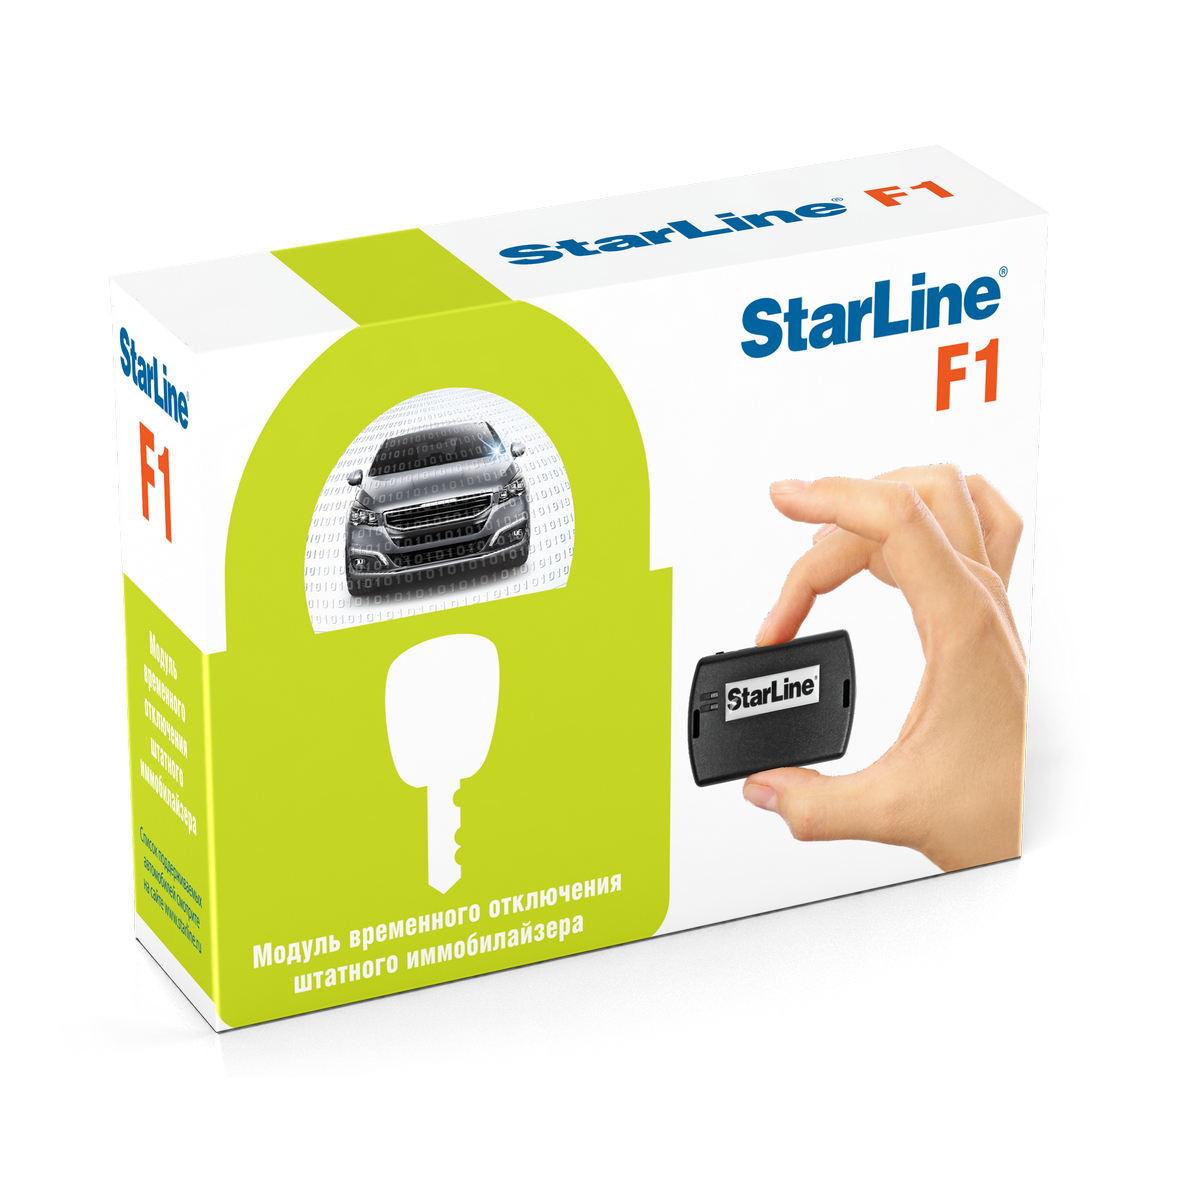 Обход иммобилайзера starline. Модуль обхода STARLINE f1. Блок обхода иммобилайзера STARLINE a91. Обходчик иммобилайзера старлайн а91. Обходчик иммобилайзера STARLINE f1 без ключевой.